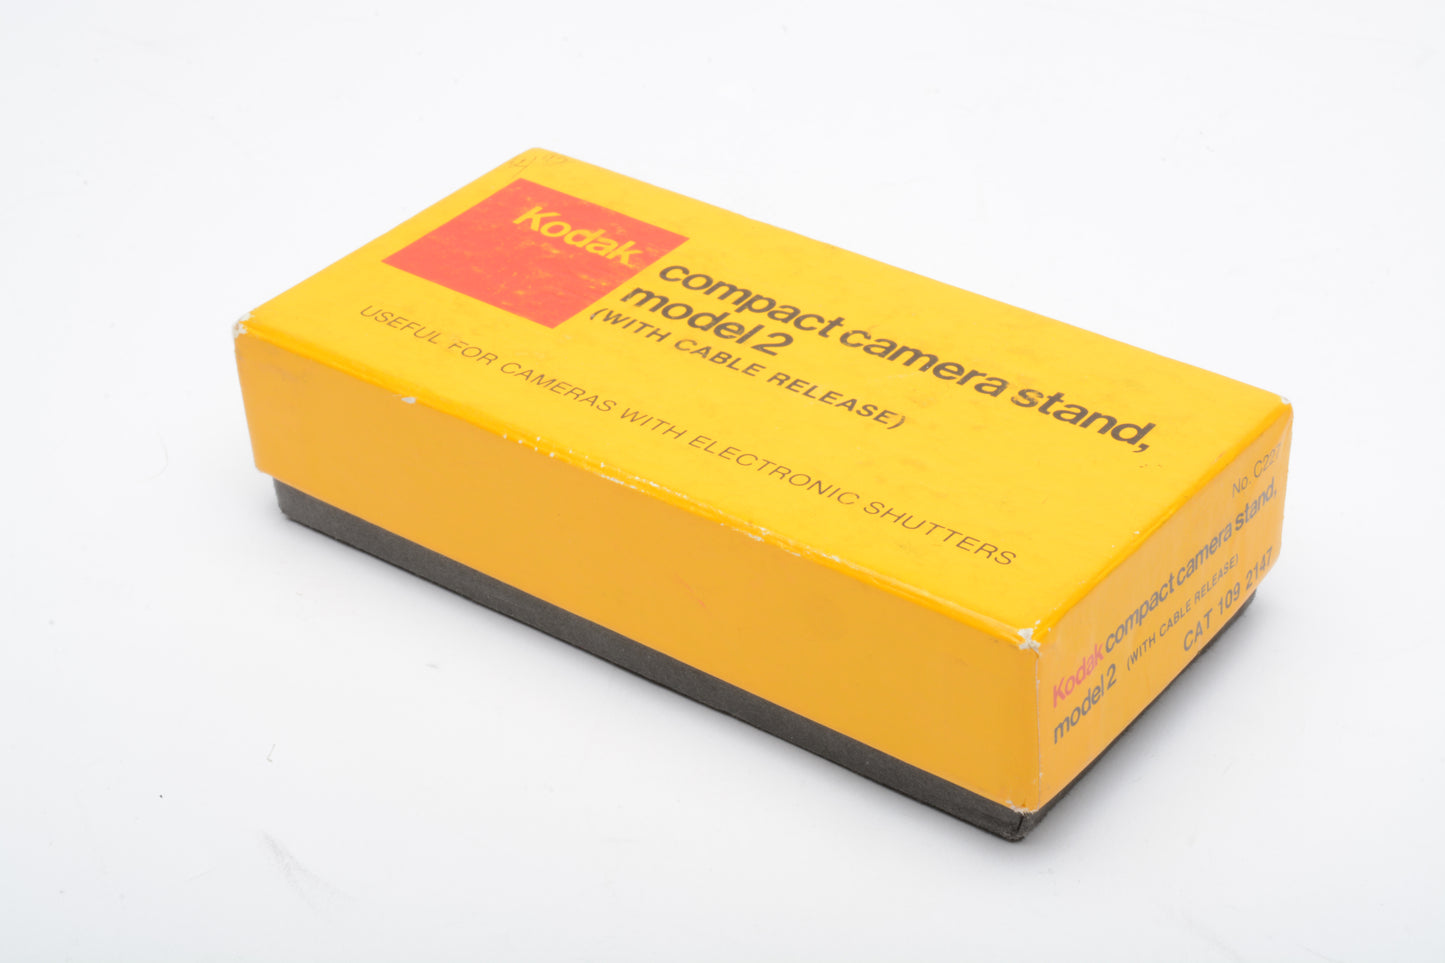 Kodak compact camera stand Model 2 w/Cable release